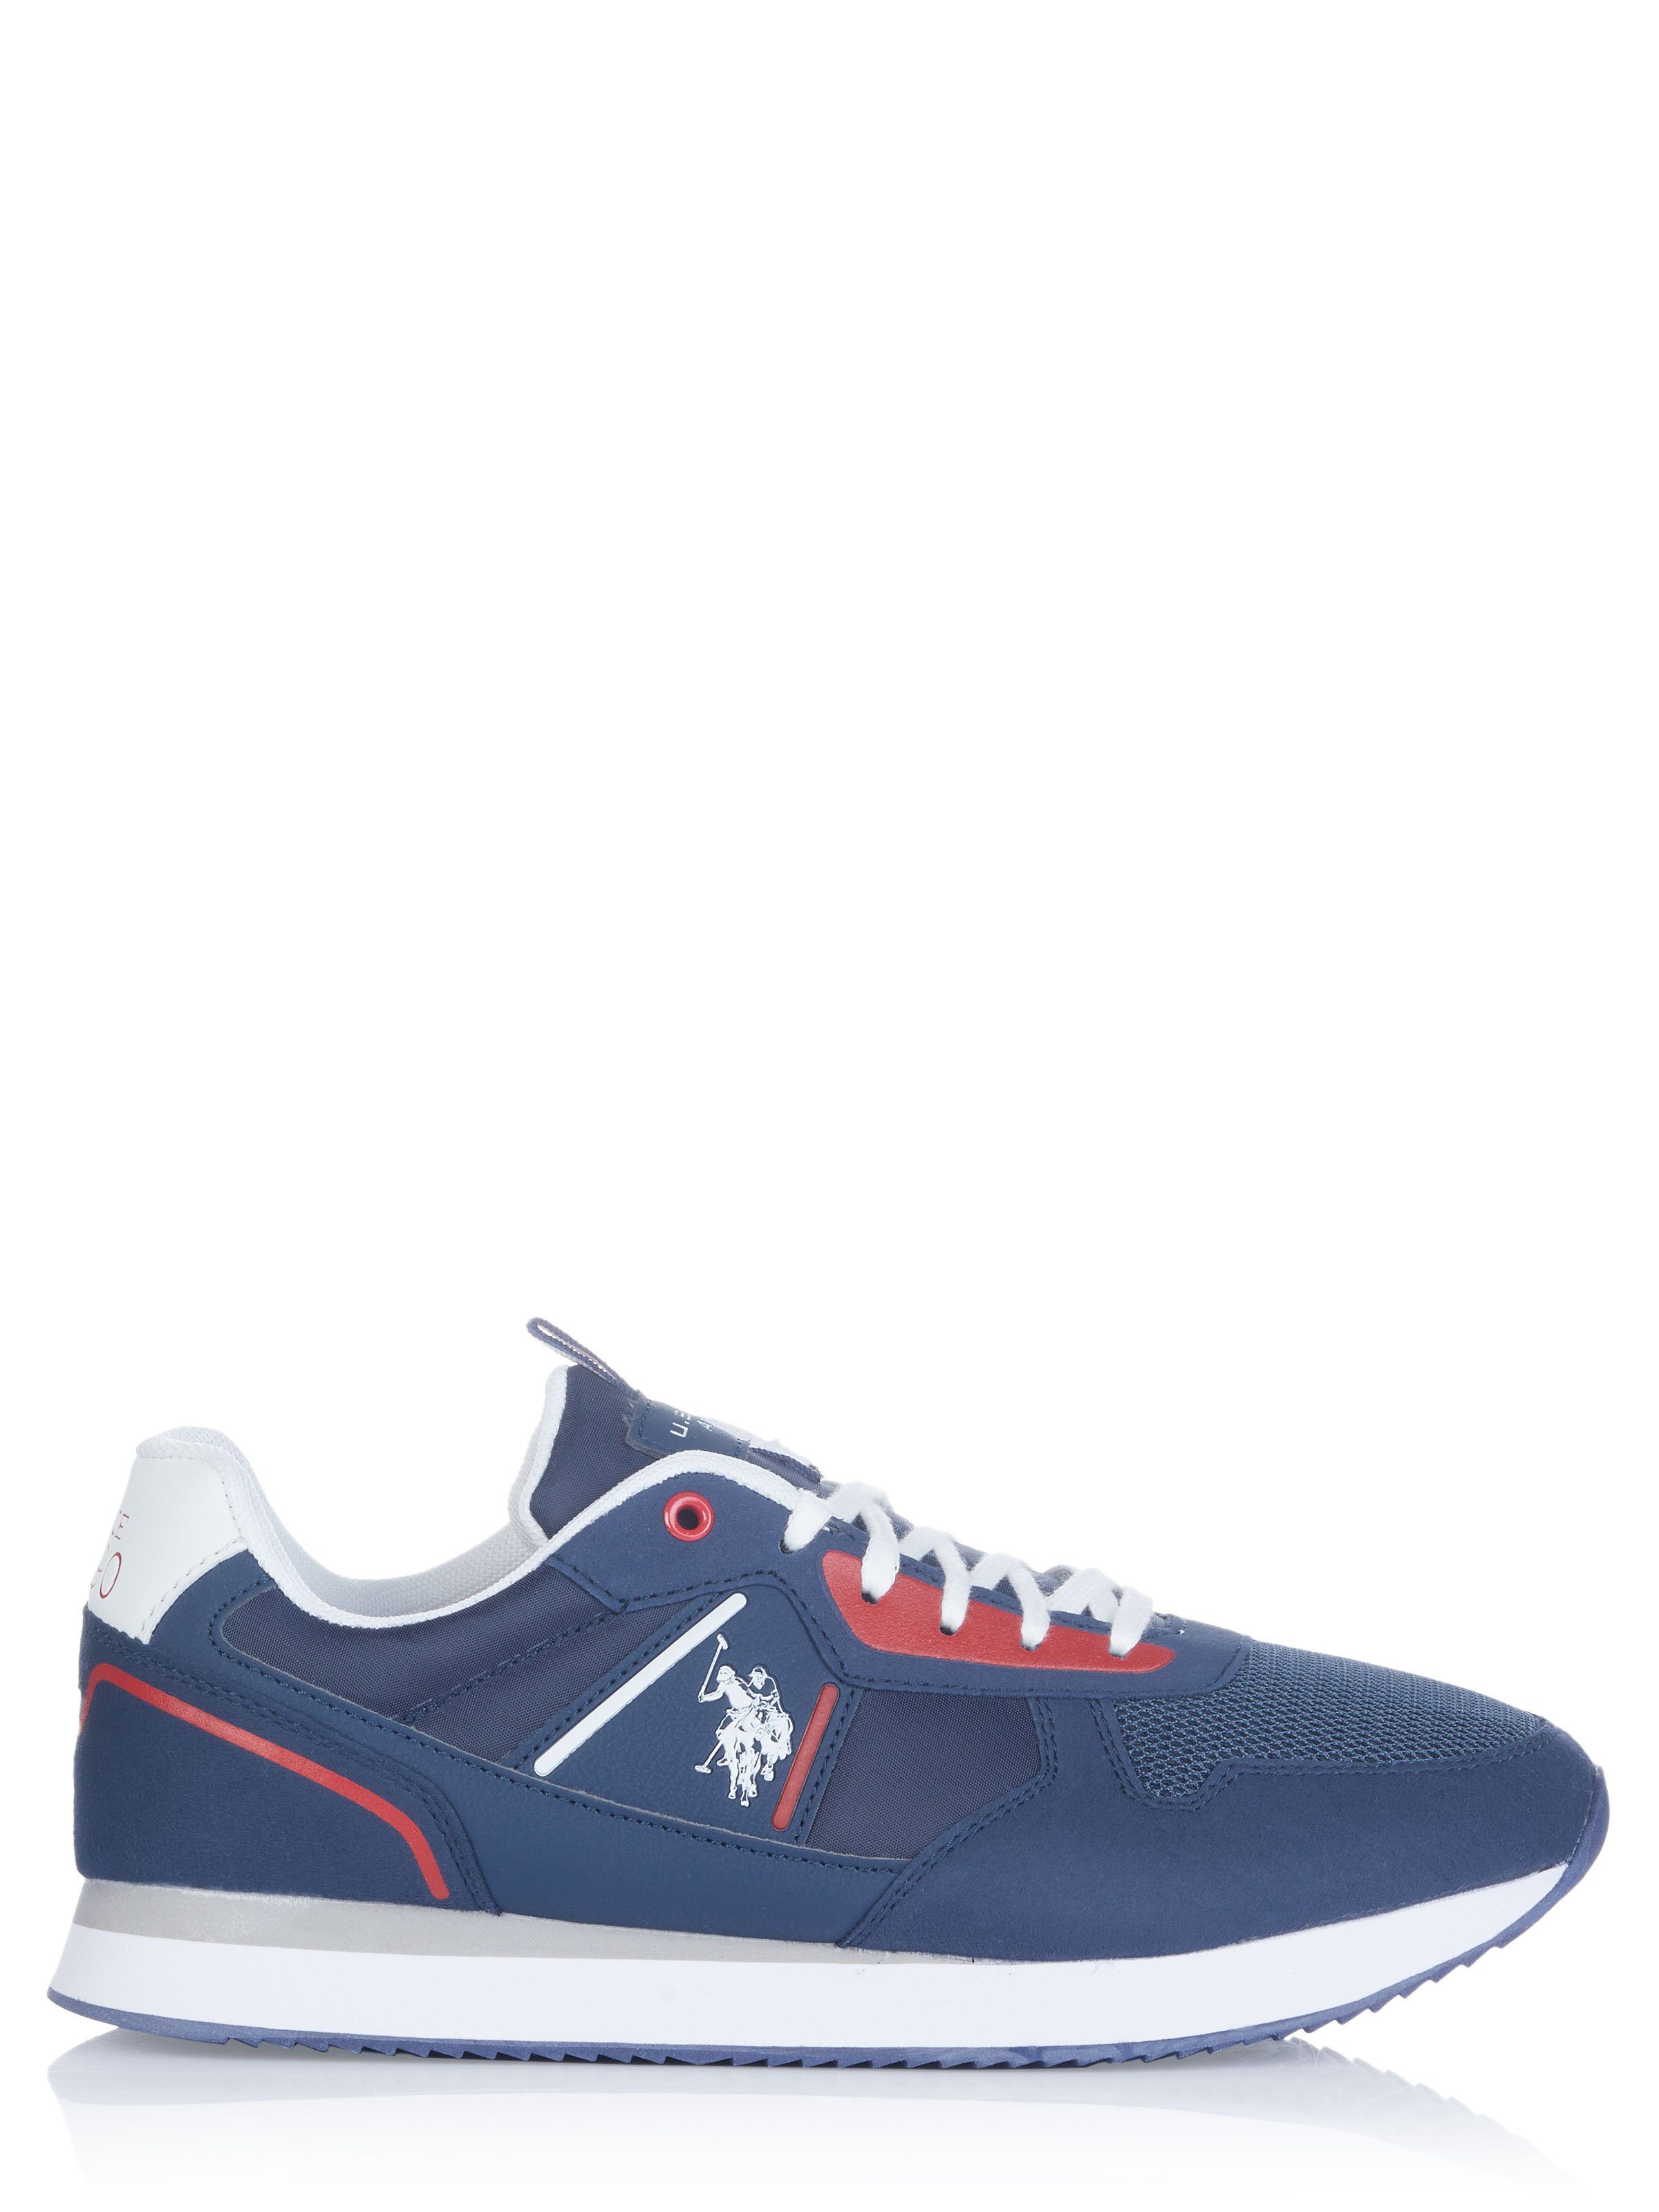 U.S. Polo Assn U.S. Polo Assn. Schuhe blau Sneaker